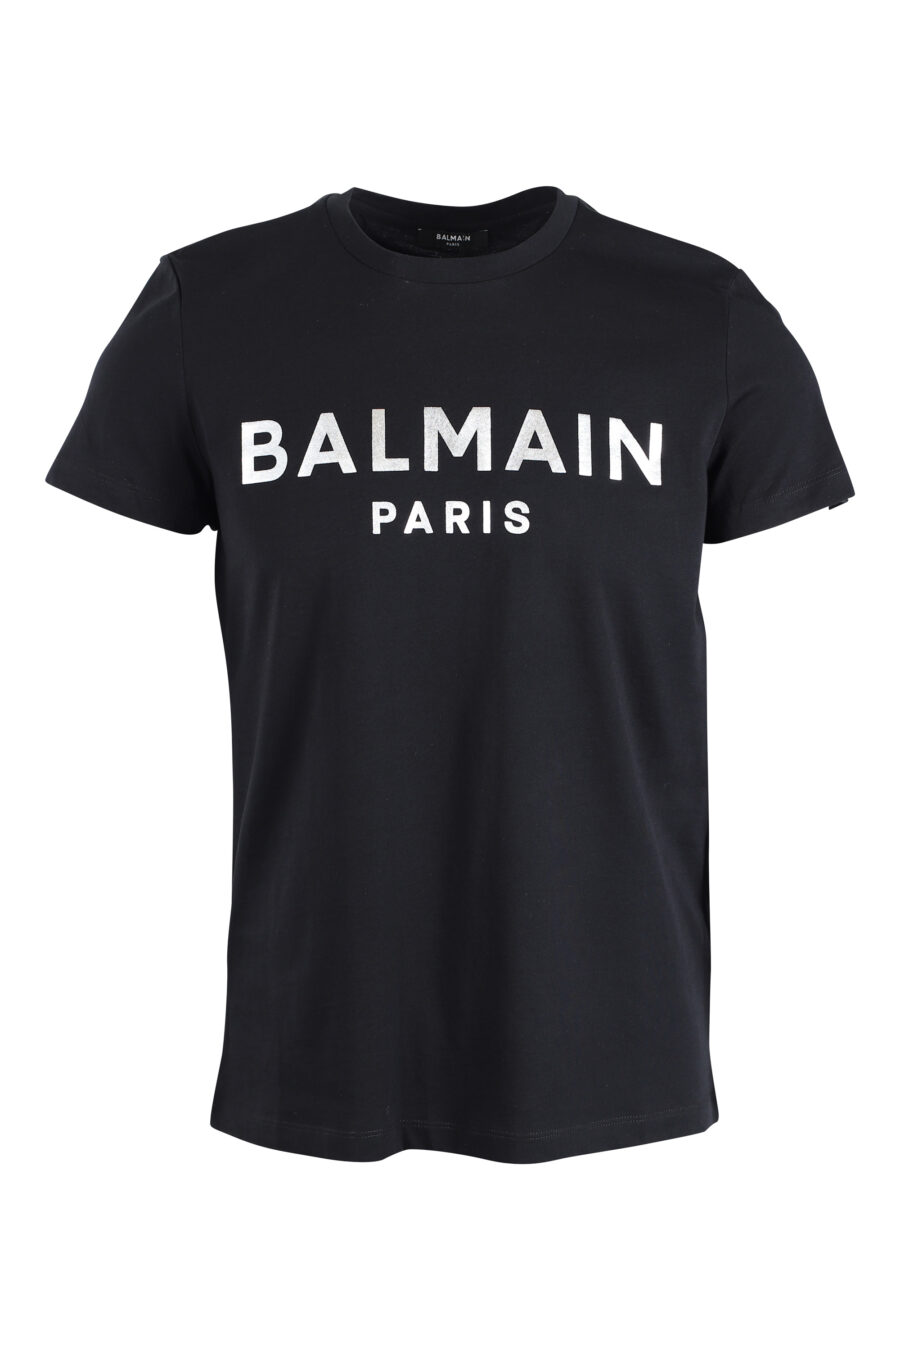 Camiseta negra con maxilogo plateado "paris" - IMG 2589